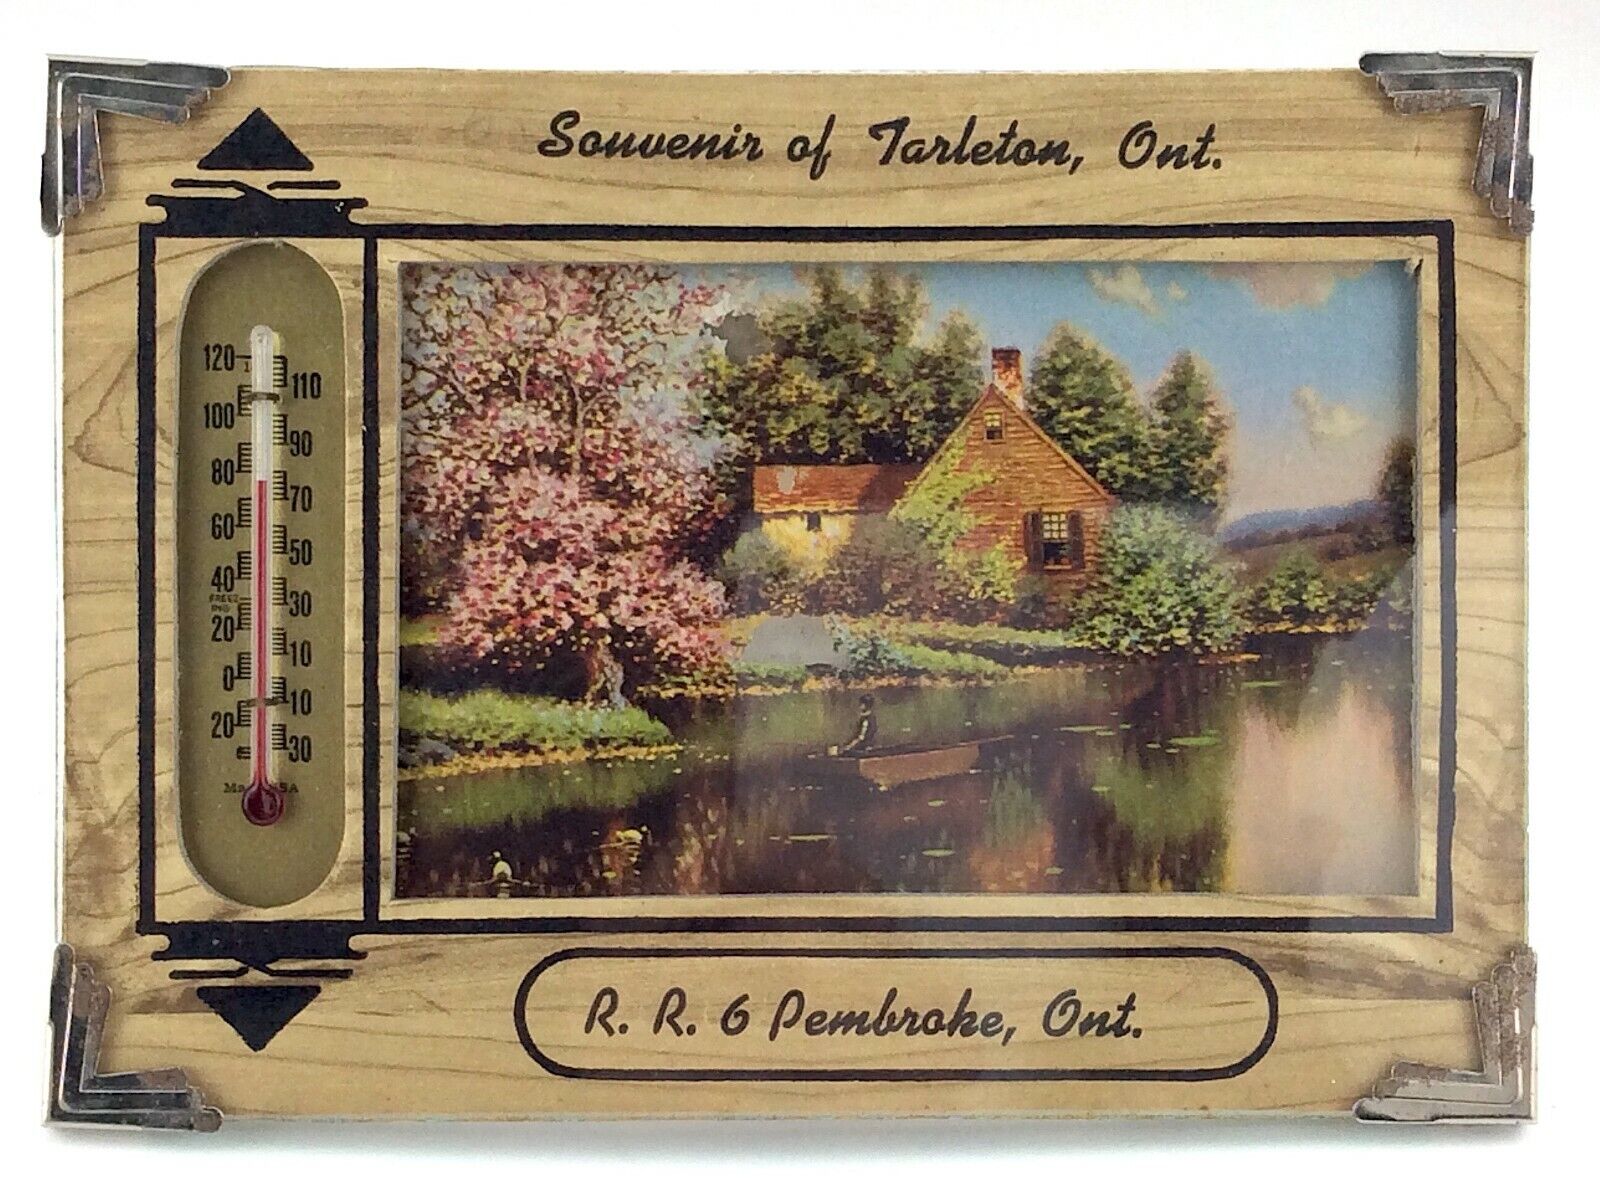 1954 Calendar Thermometer Pembroke Ontario Souvenir Cottage River Scene N113